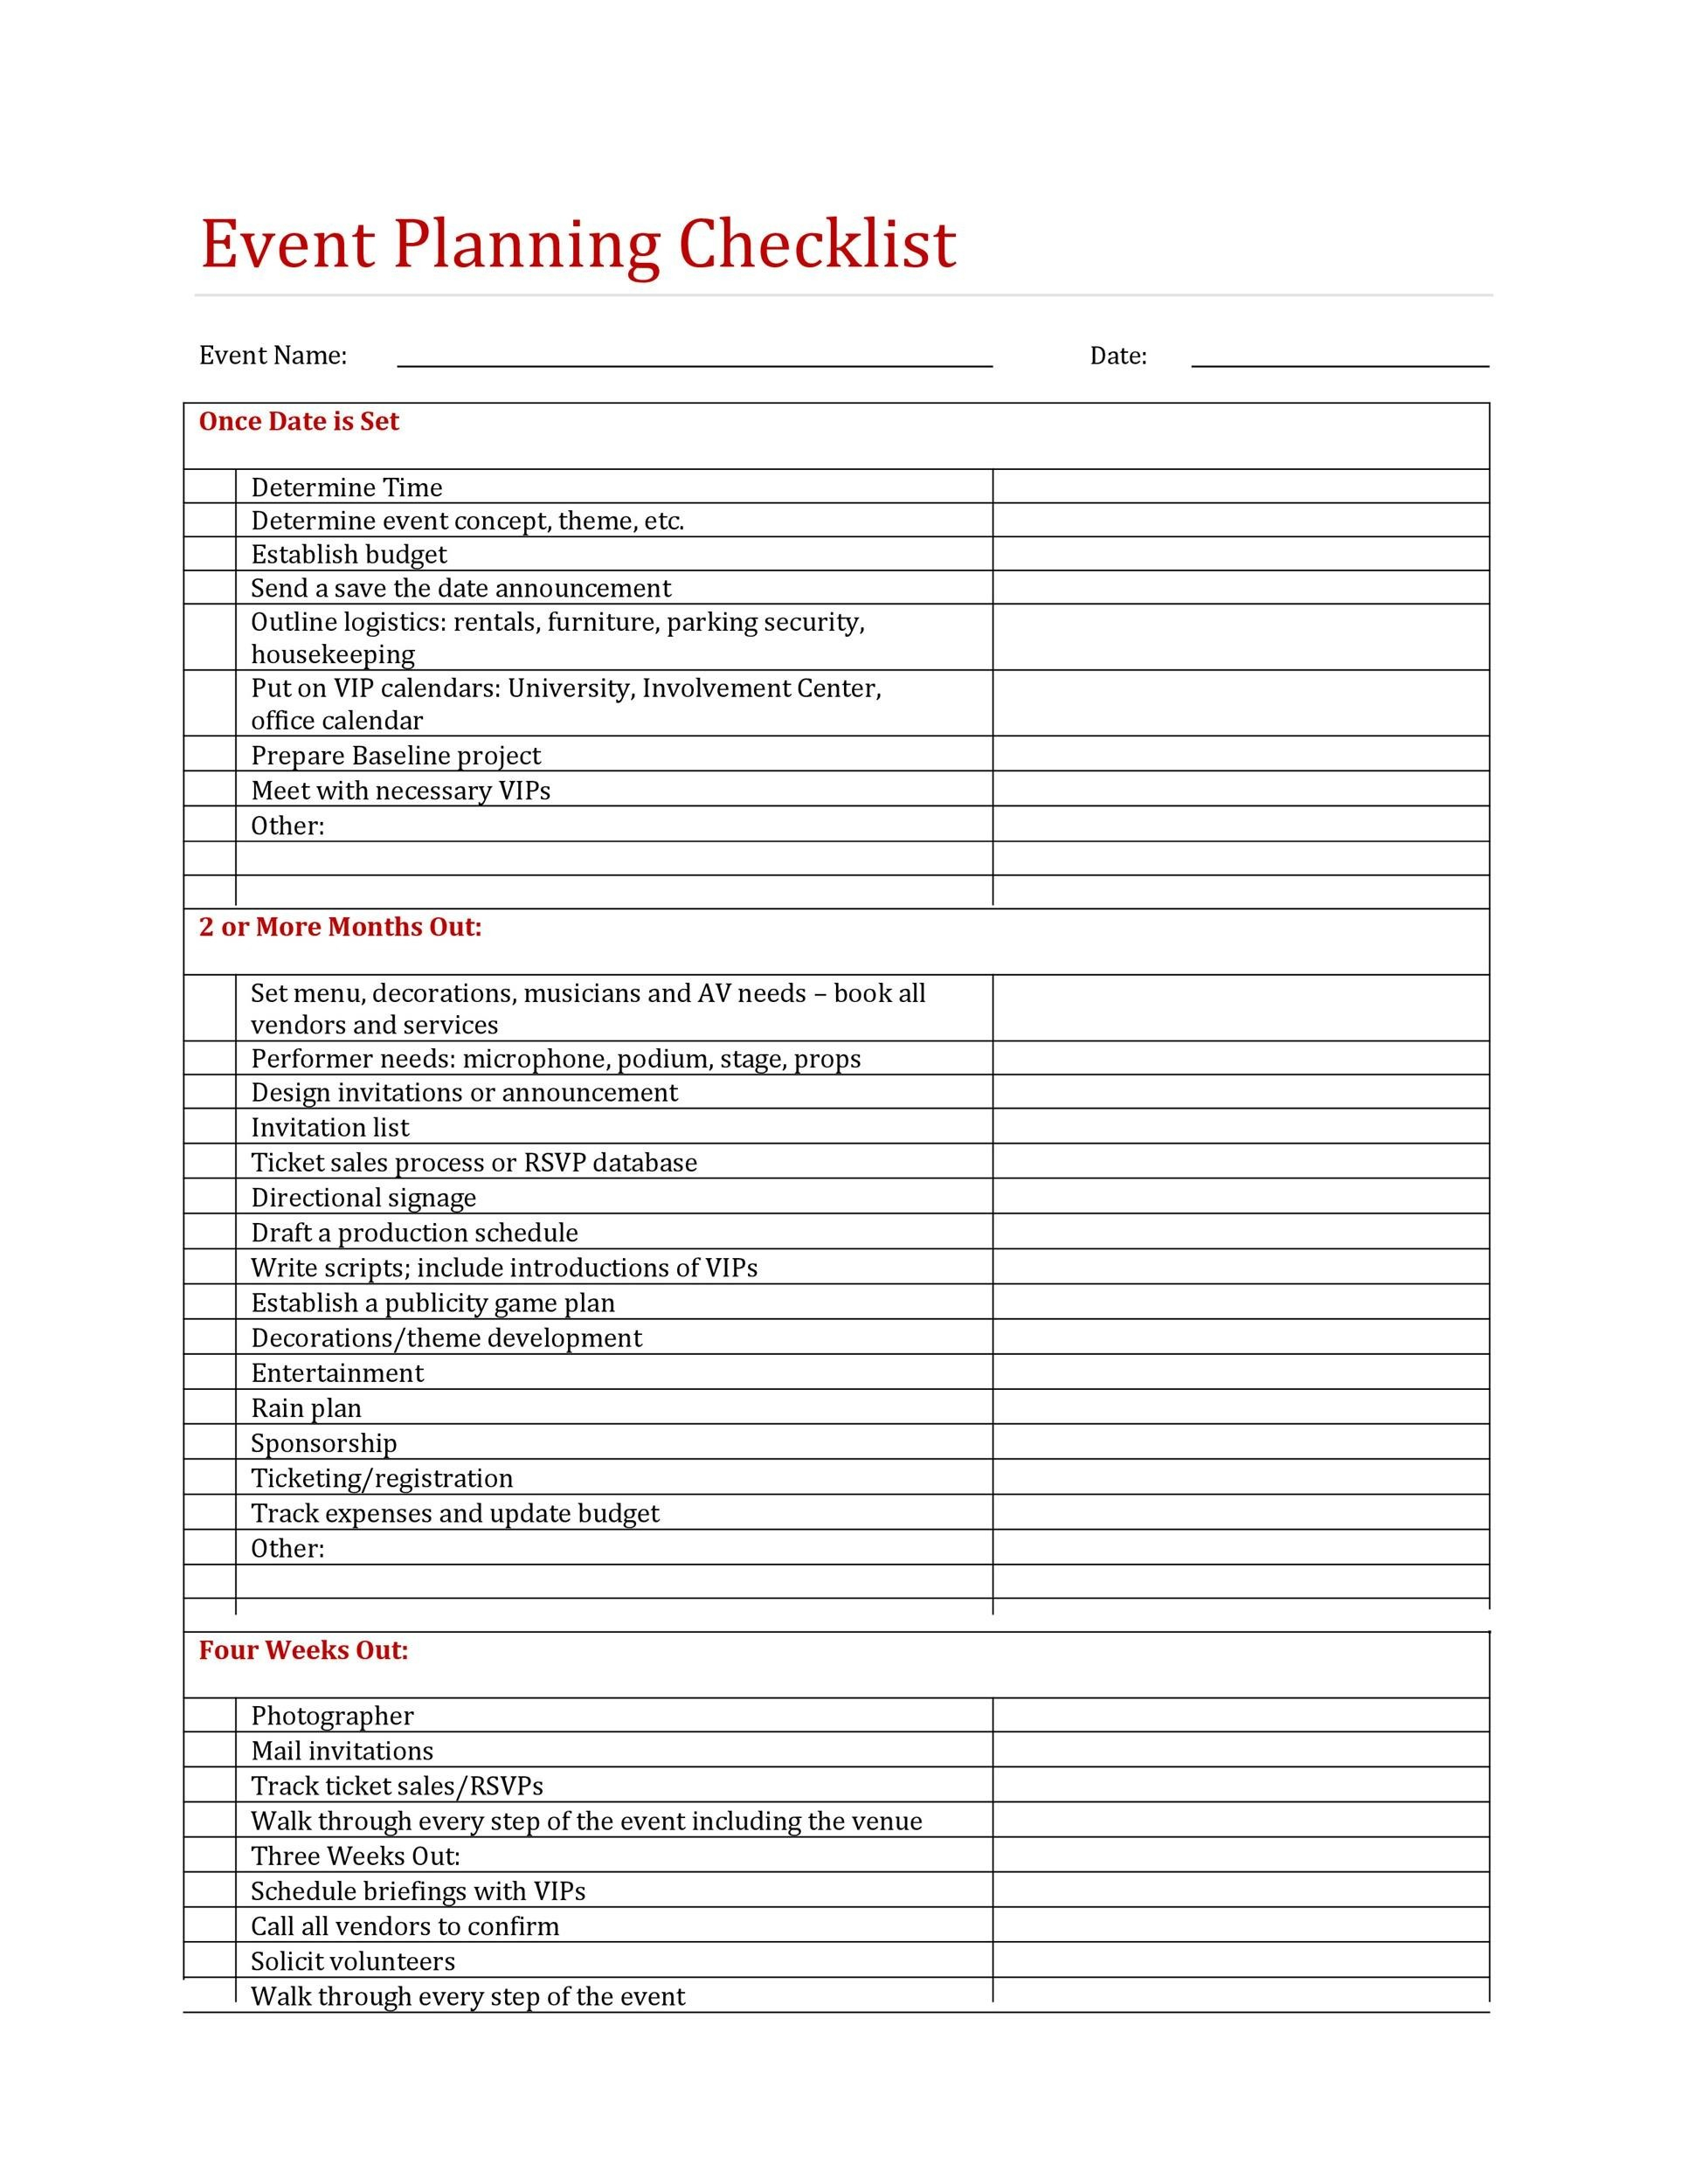 11 Professional Event Planning Checklist Templates ᐅ TemplateLab Regarding Fundraising Event Planning Checklist Template In Fundraising Event Planning Checklist Template